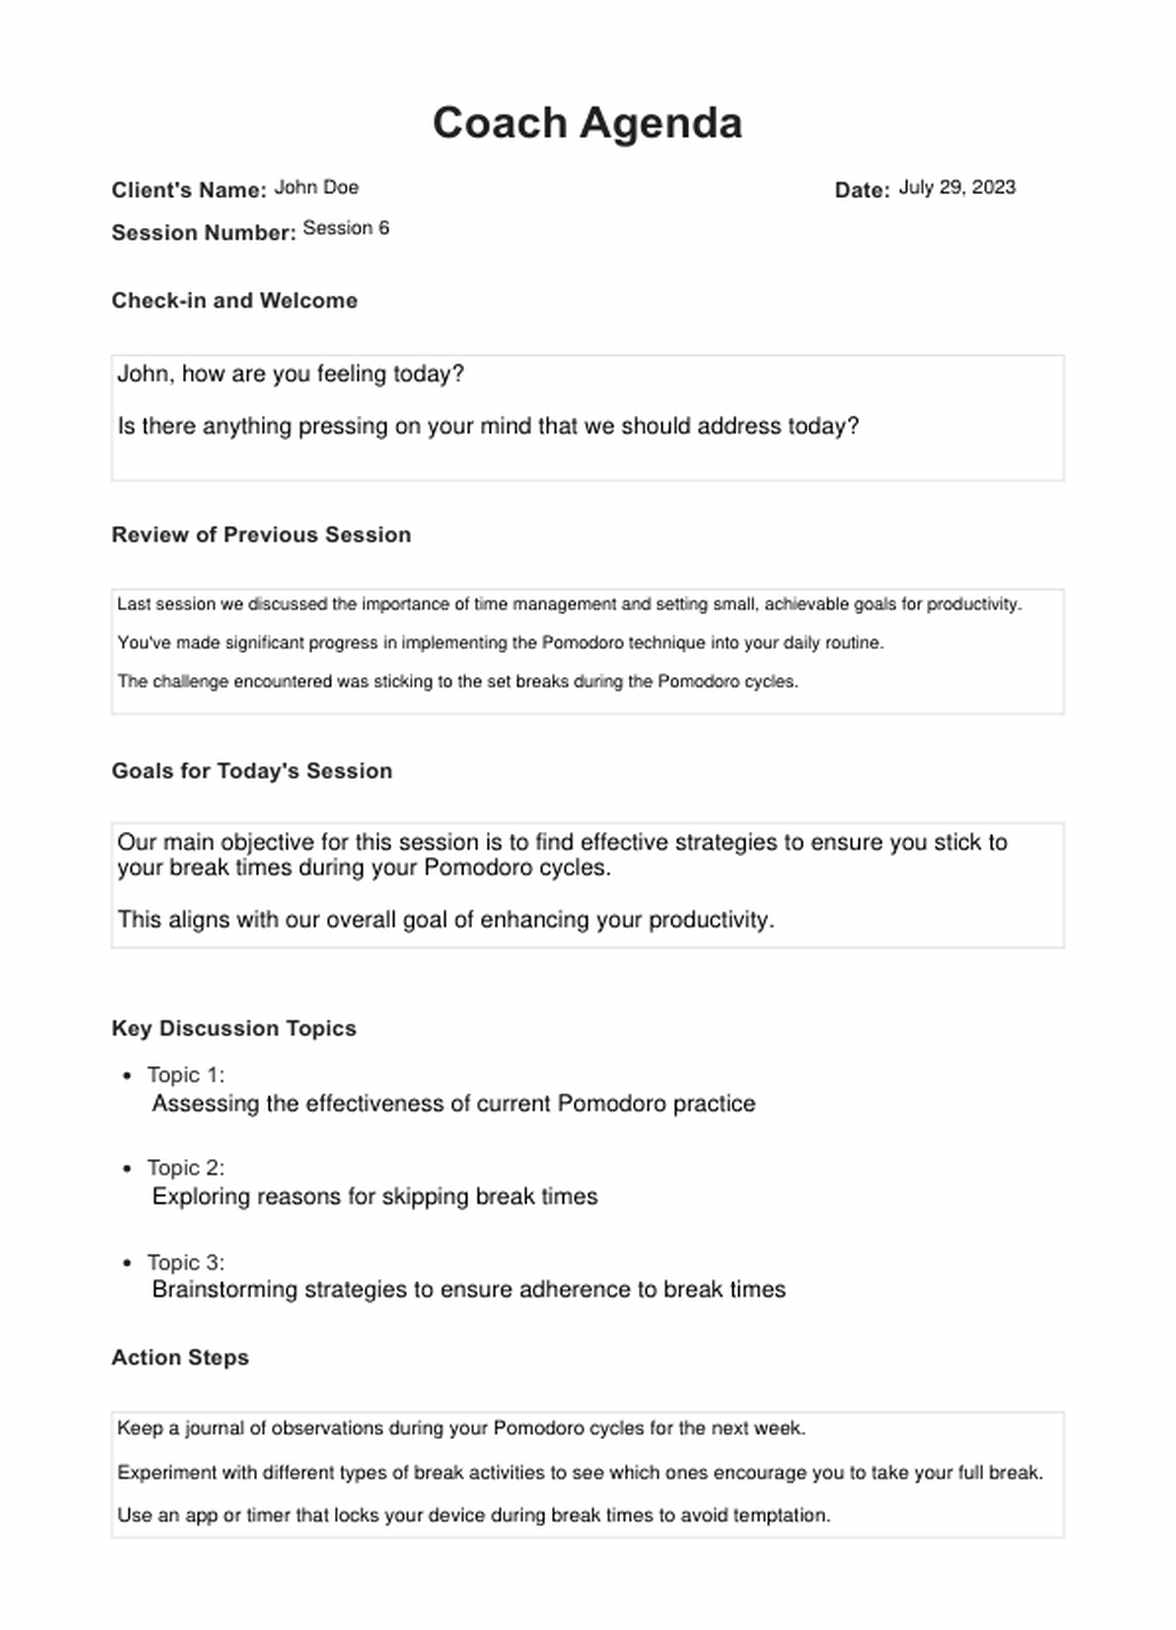 Coach Agenda PDF Example